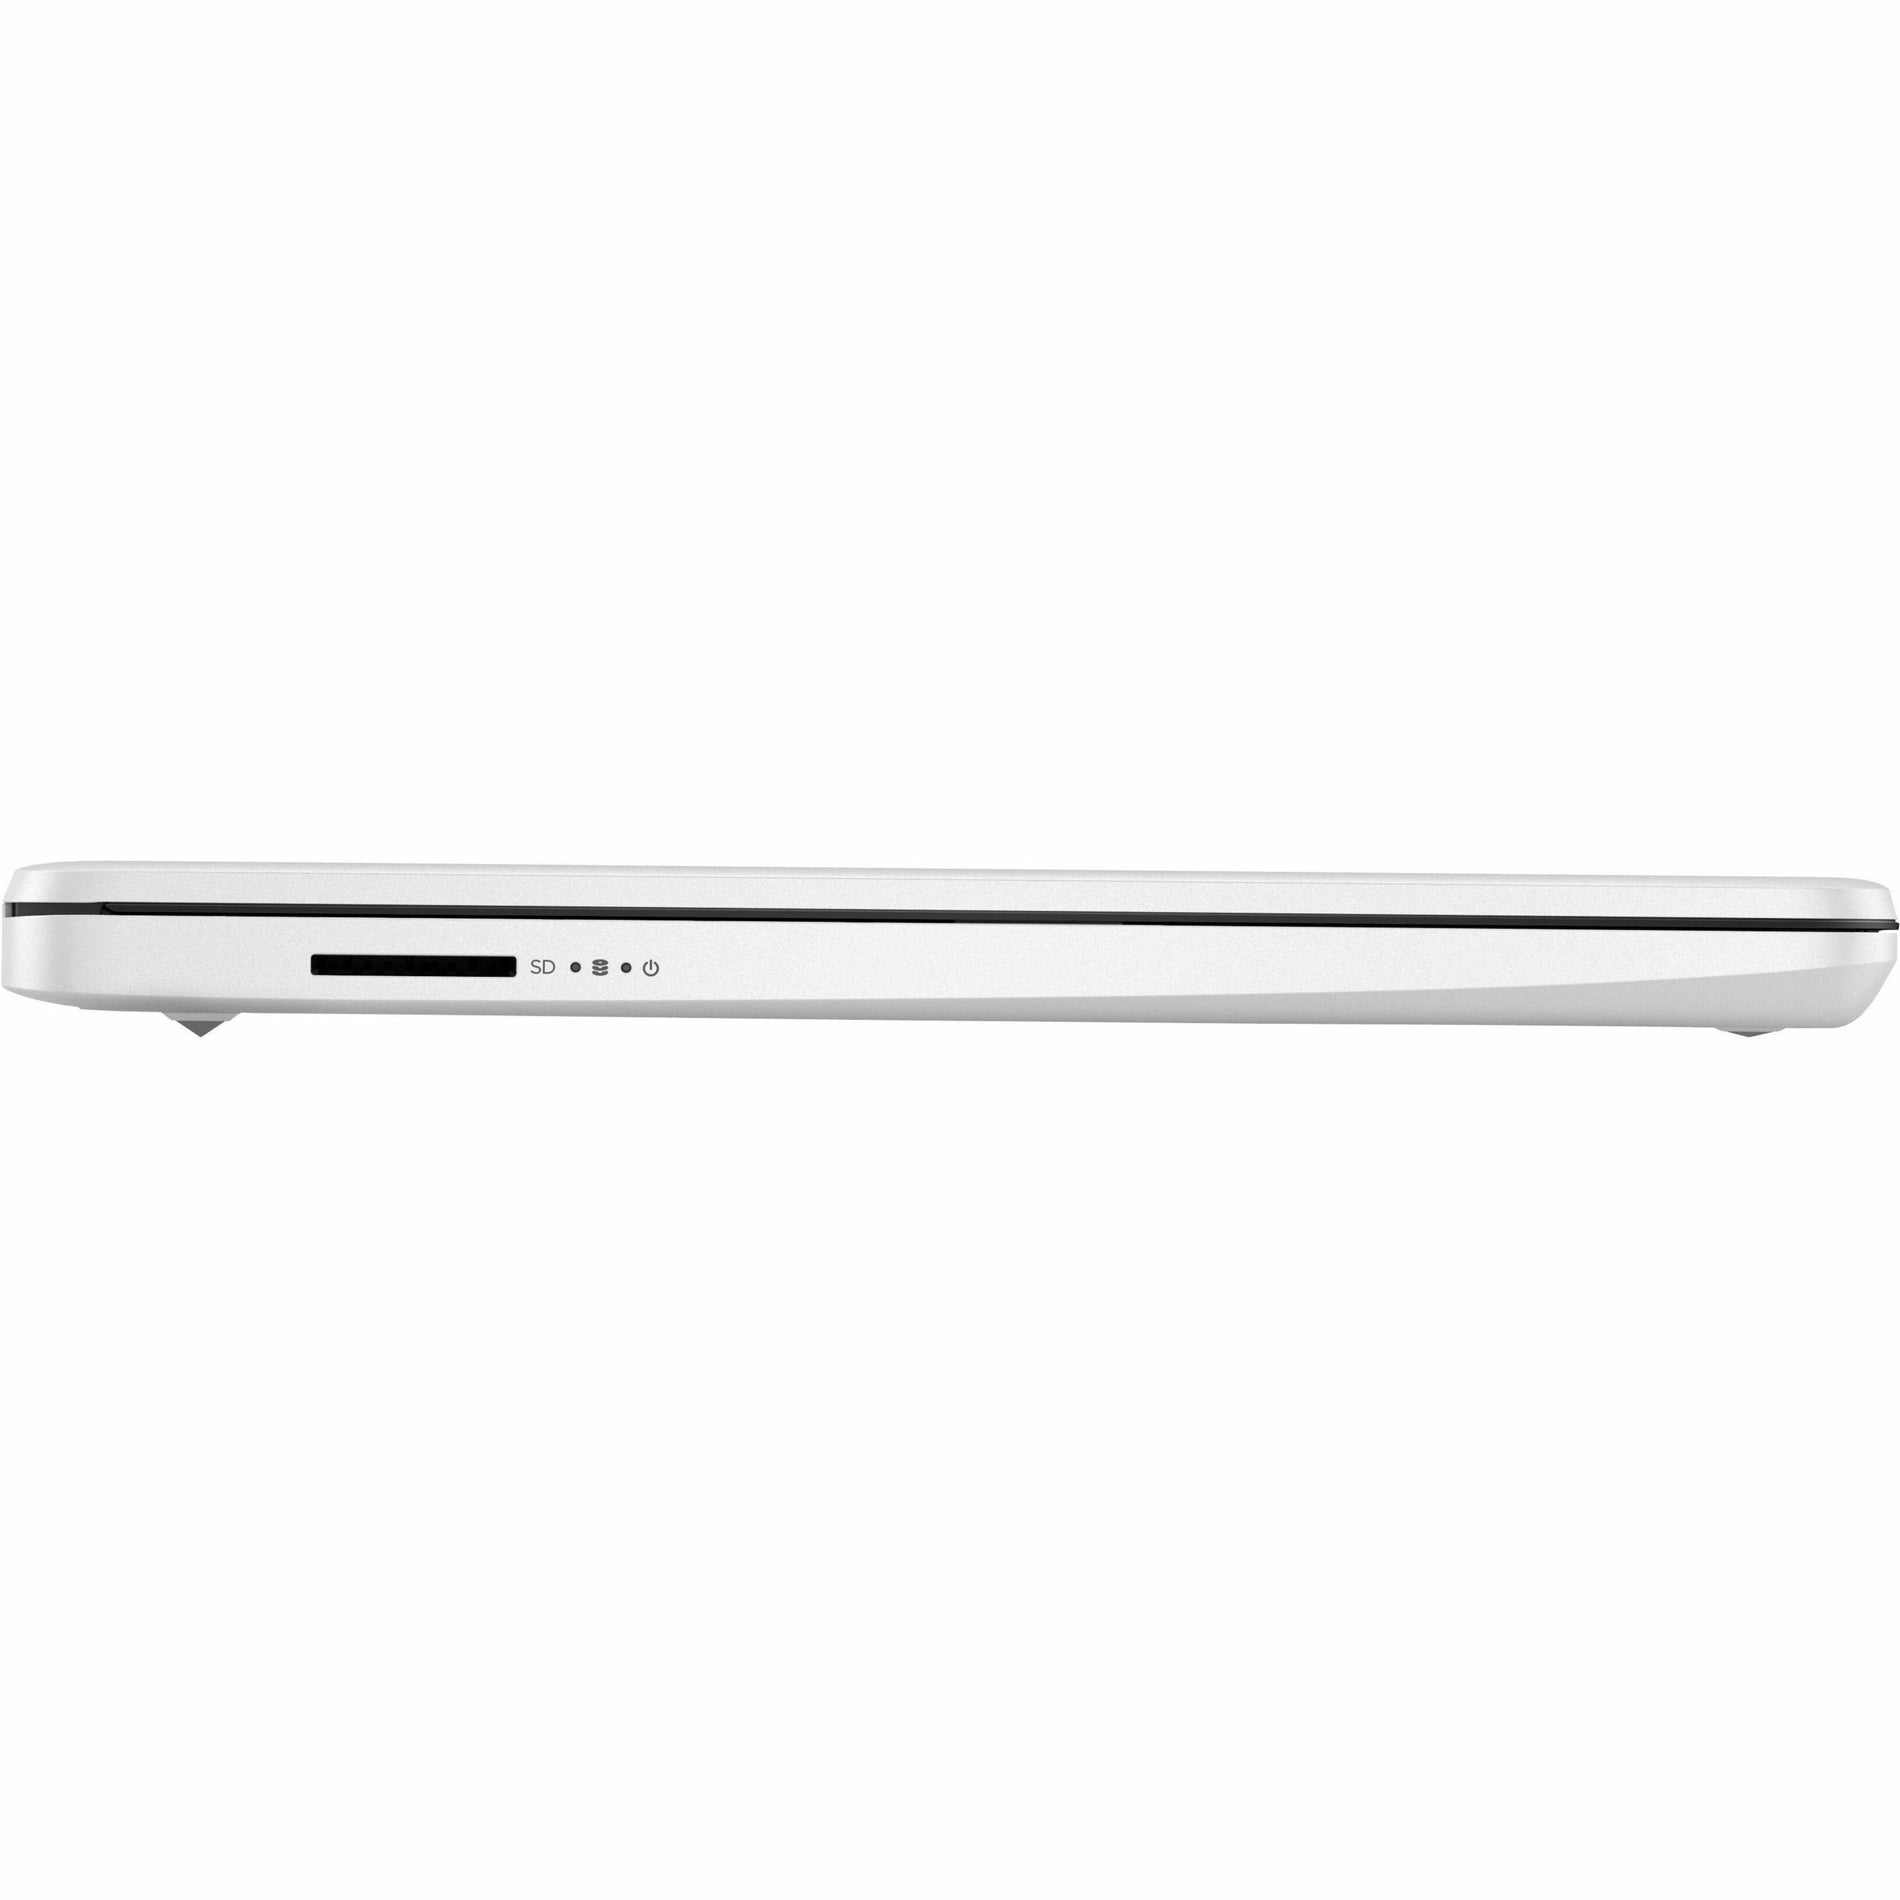 HP Laptop 14-dq0080nr 14" Touchscreen Notebook, Intel Celeron N4020, 4GB RAM, 64GB Flash Memory, Windows 10 Home in S mode